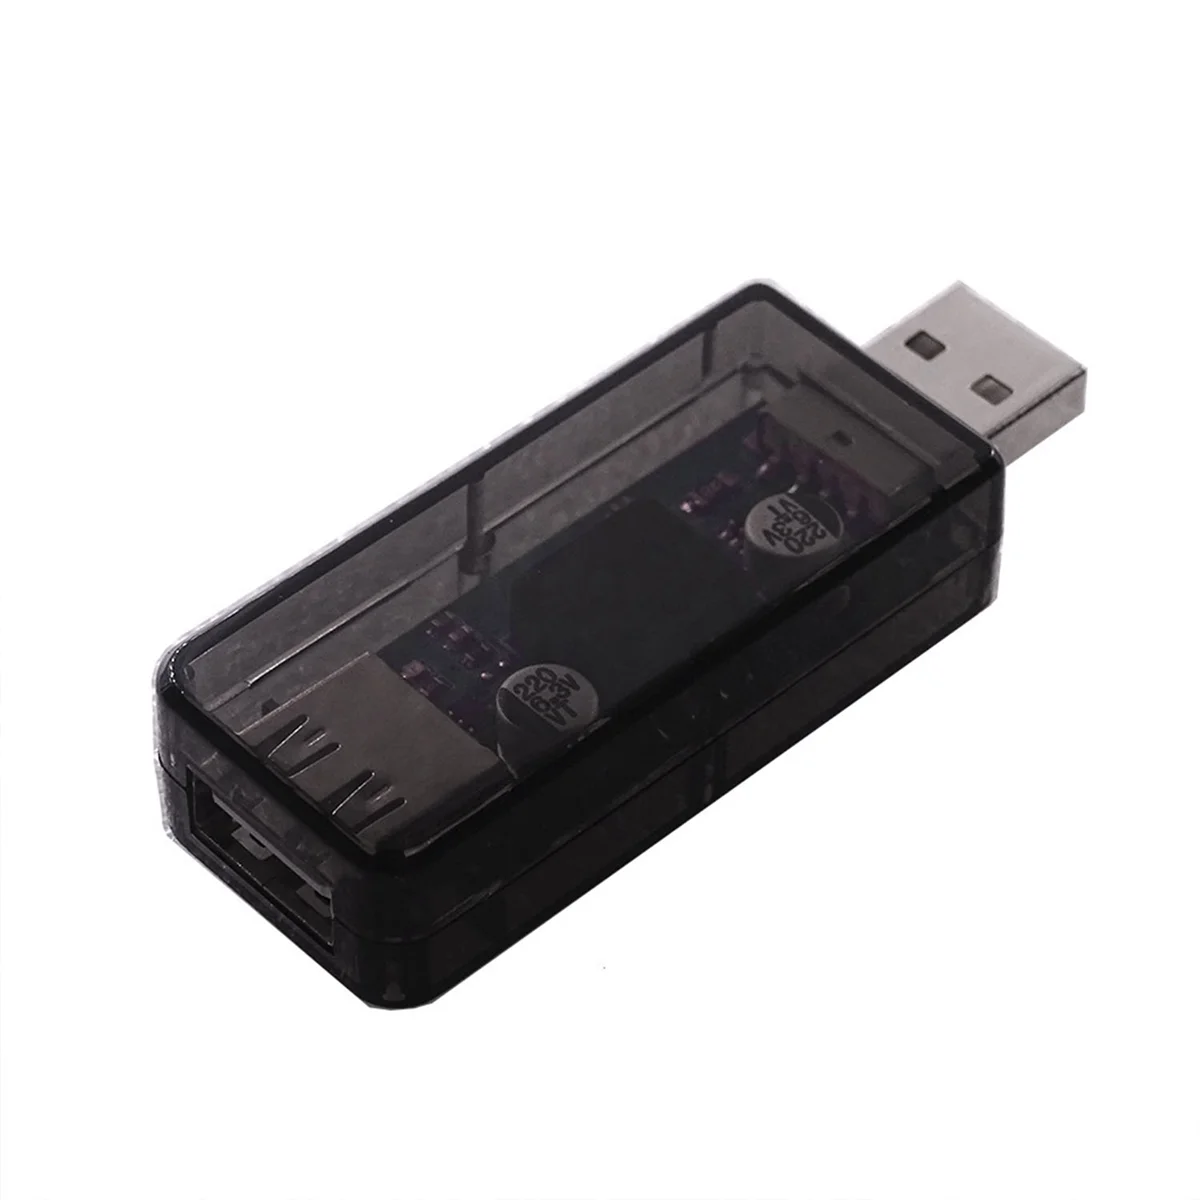 2X Модуль USB-изолятора ADUM3160 Поддержка модуля изоляции напряжения от USB к USB 12 Мбит /с Изображение 1